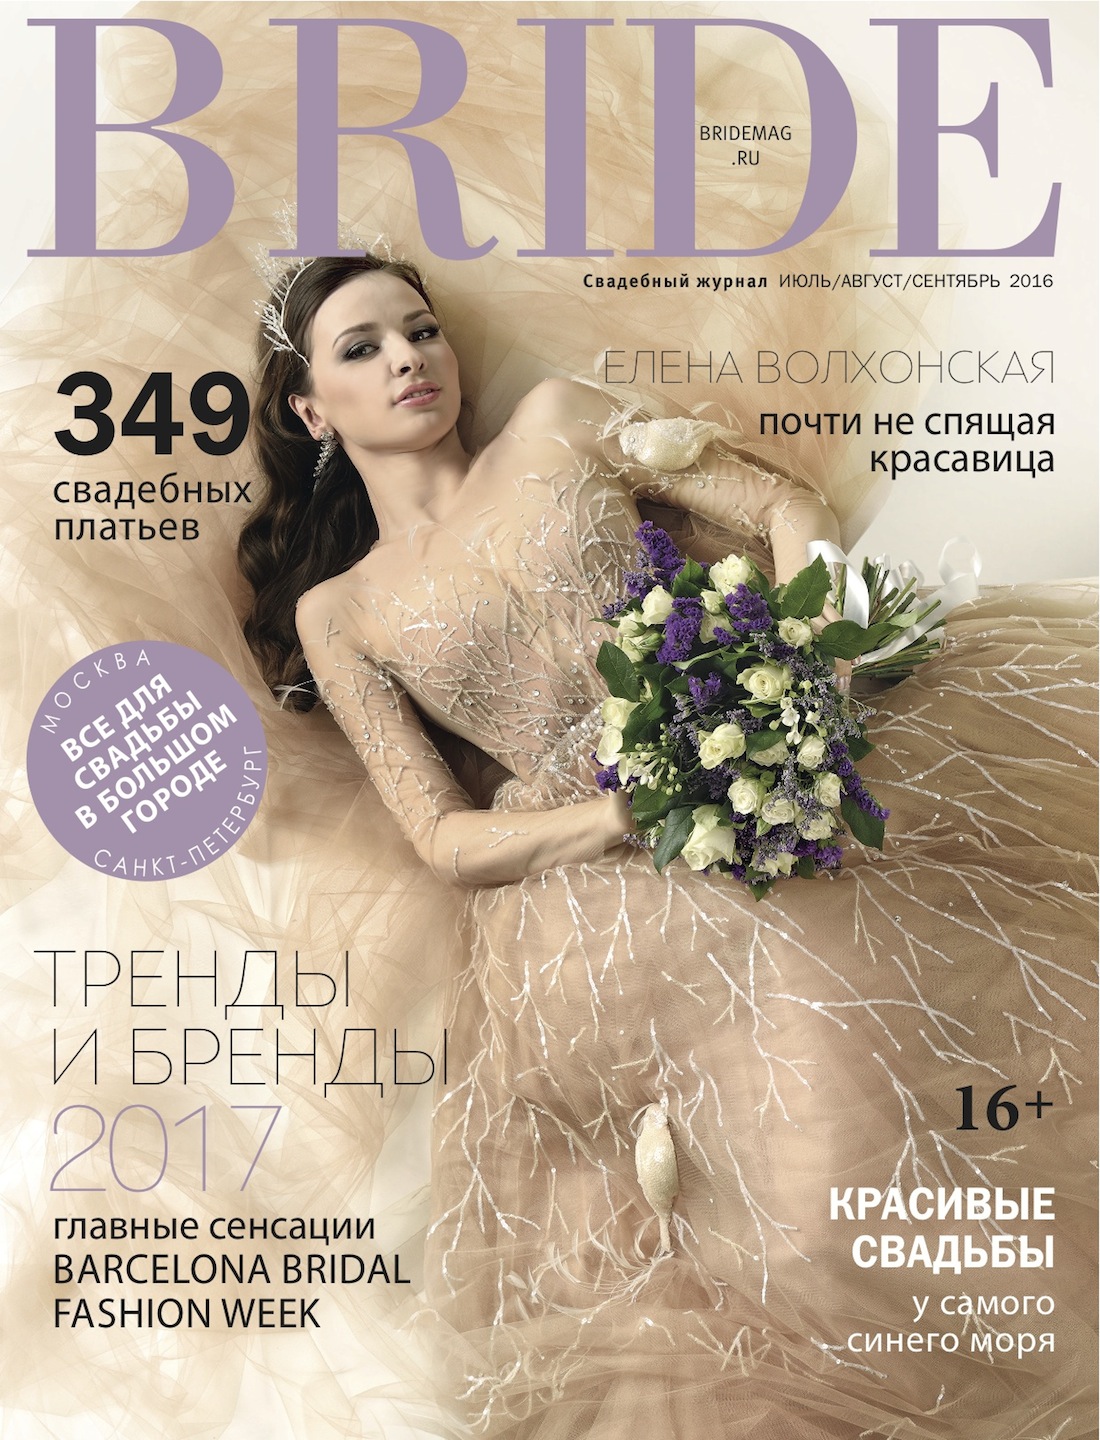 Свадебный журнал BRIDE. АИюль/август/сентябрь